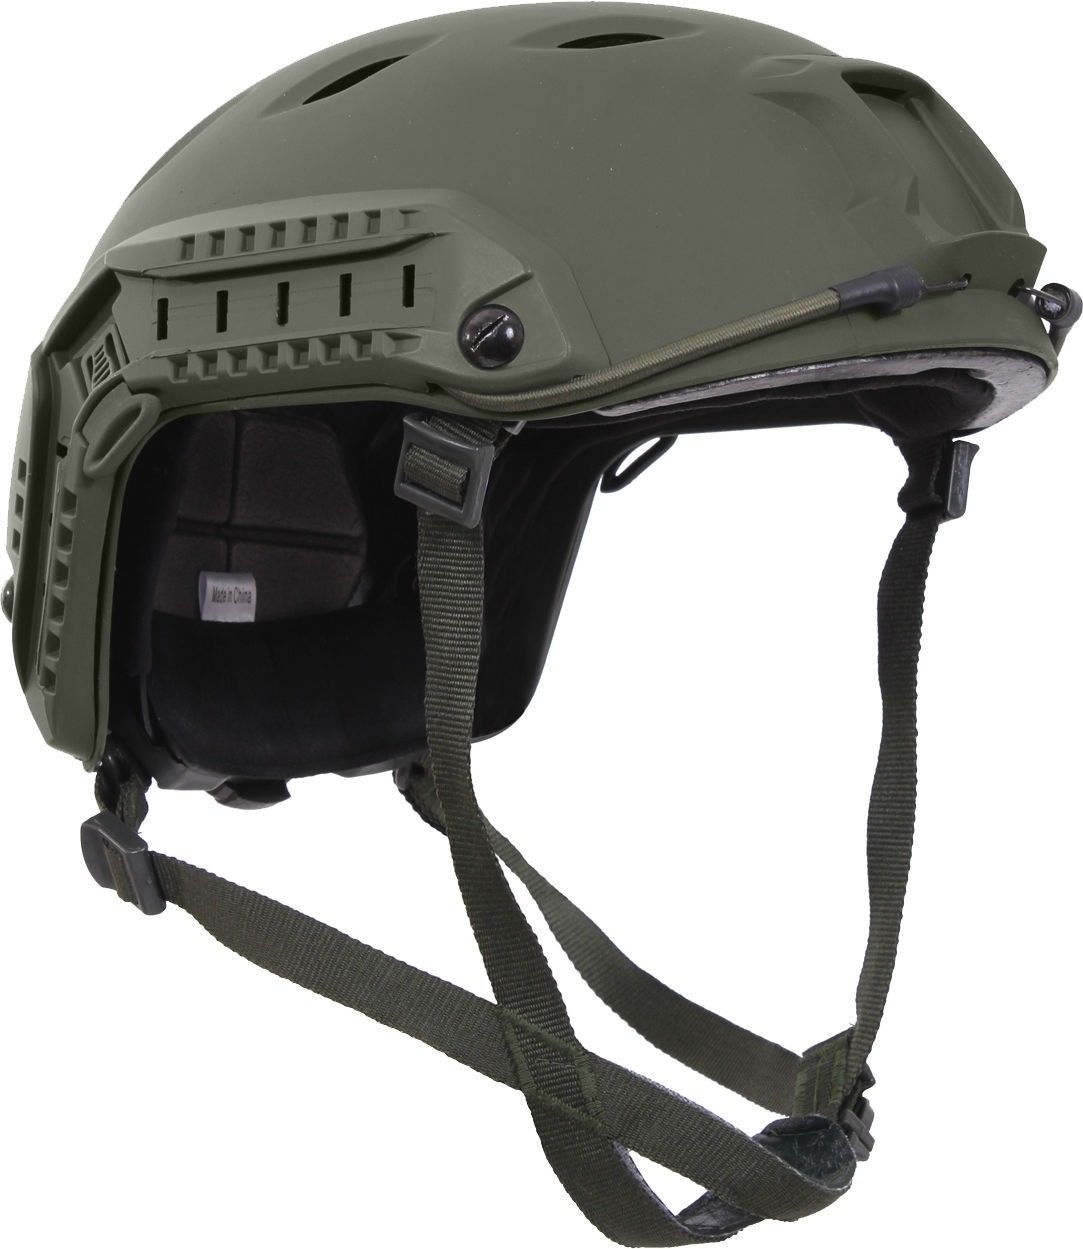 Olive Drab Advanced Tactical Adjustable Airsoft Helmet